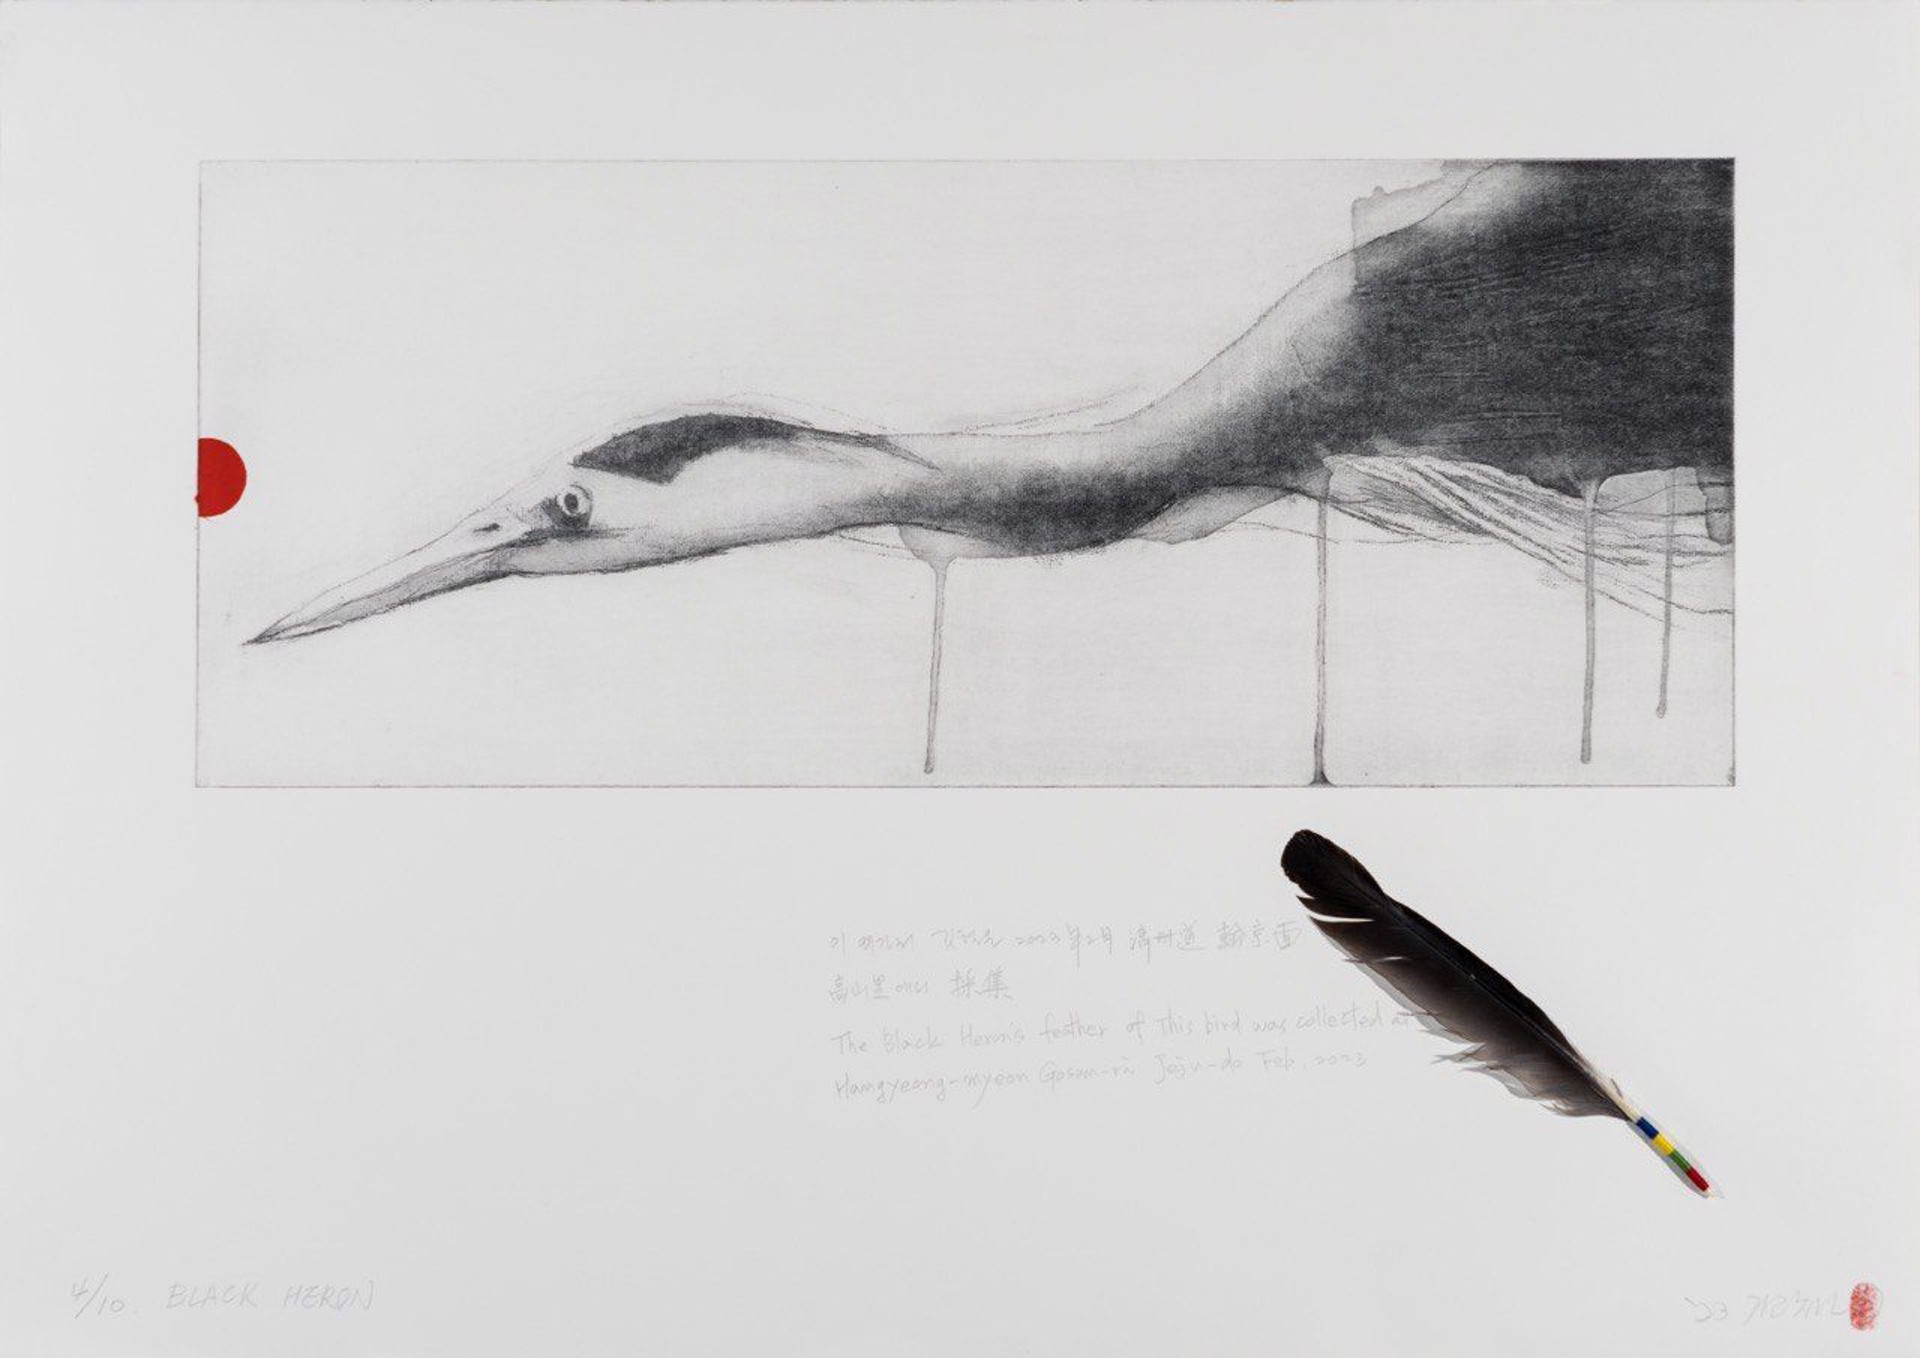 Black heron by Gilchun Koh